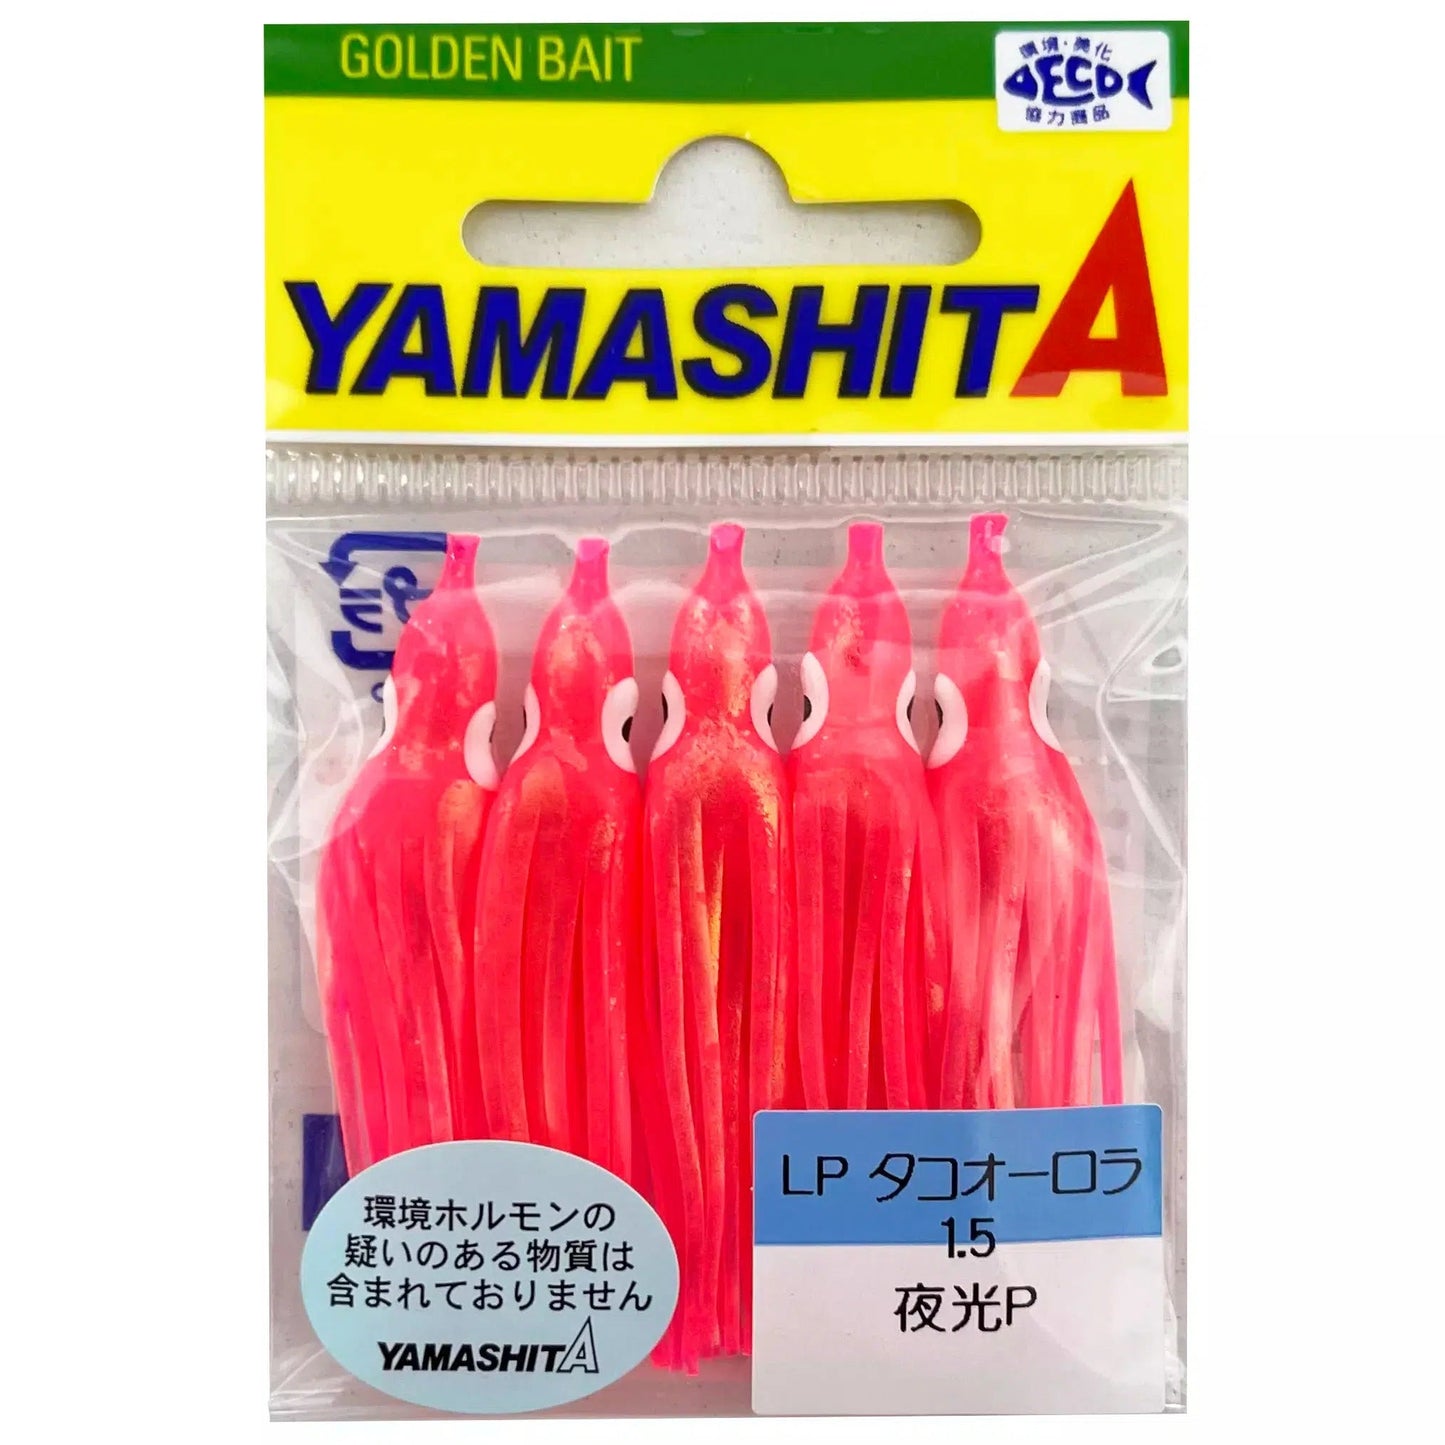 Yamashita Golden Bait Skirt (5 per pack) BB-Skirt-Yamashita-1.5-Aurora Pink-Fishing Station